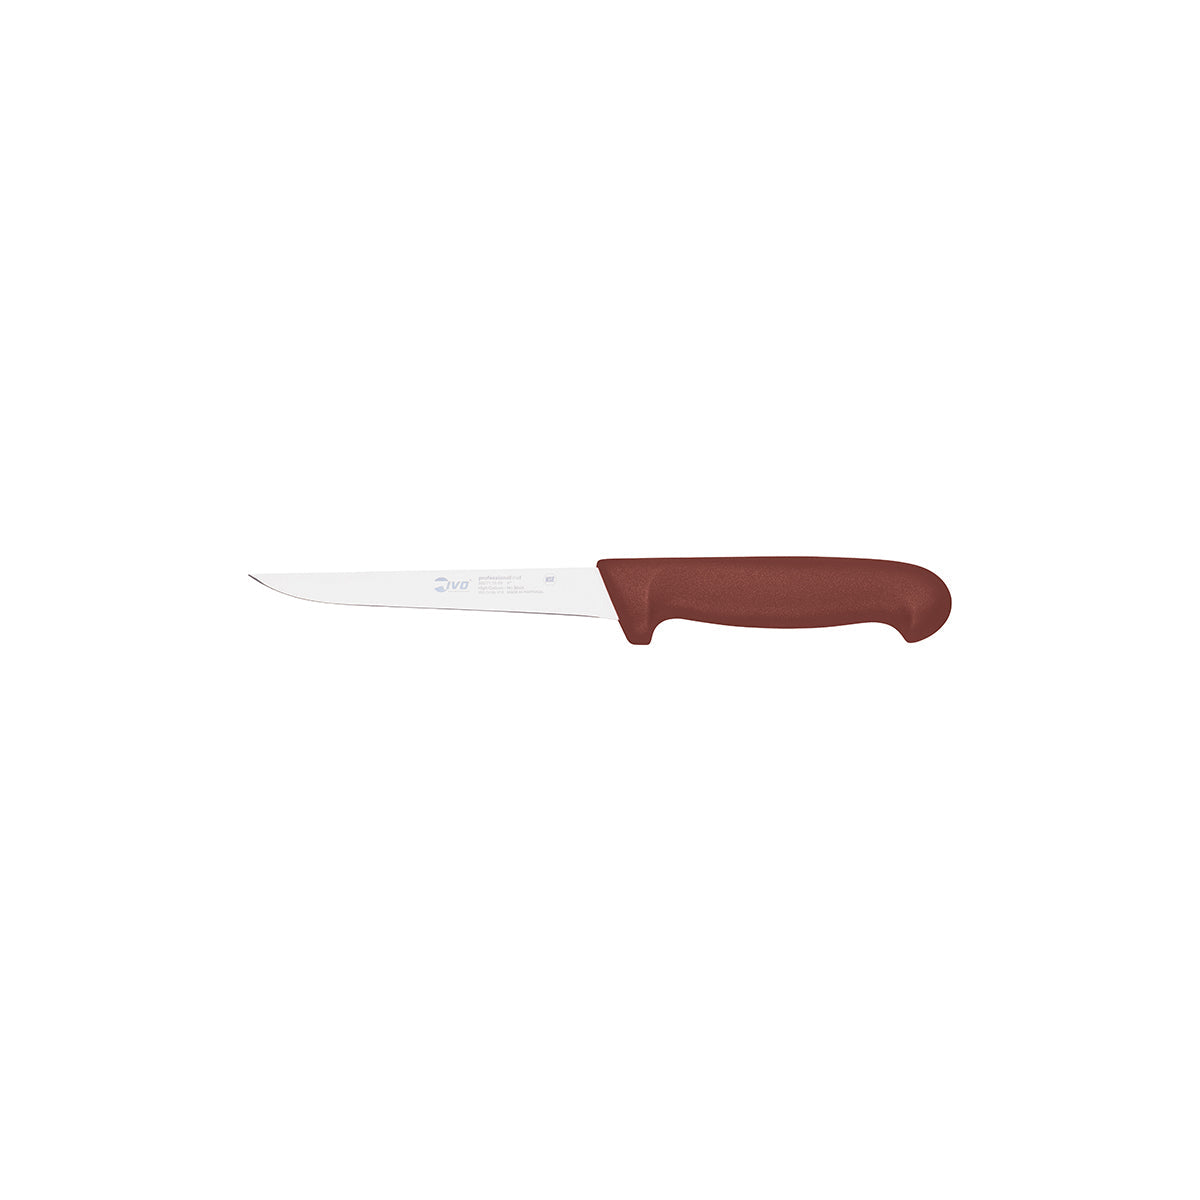 25433 Ivo Professional Line I Boning Knife Brown 150mm Tomkin Australia Hospitality Supplies